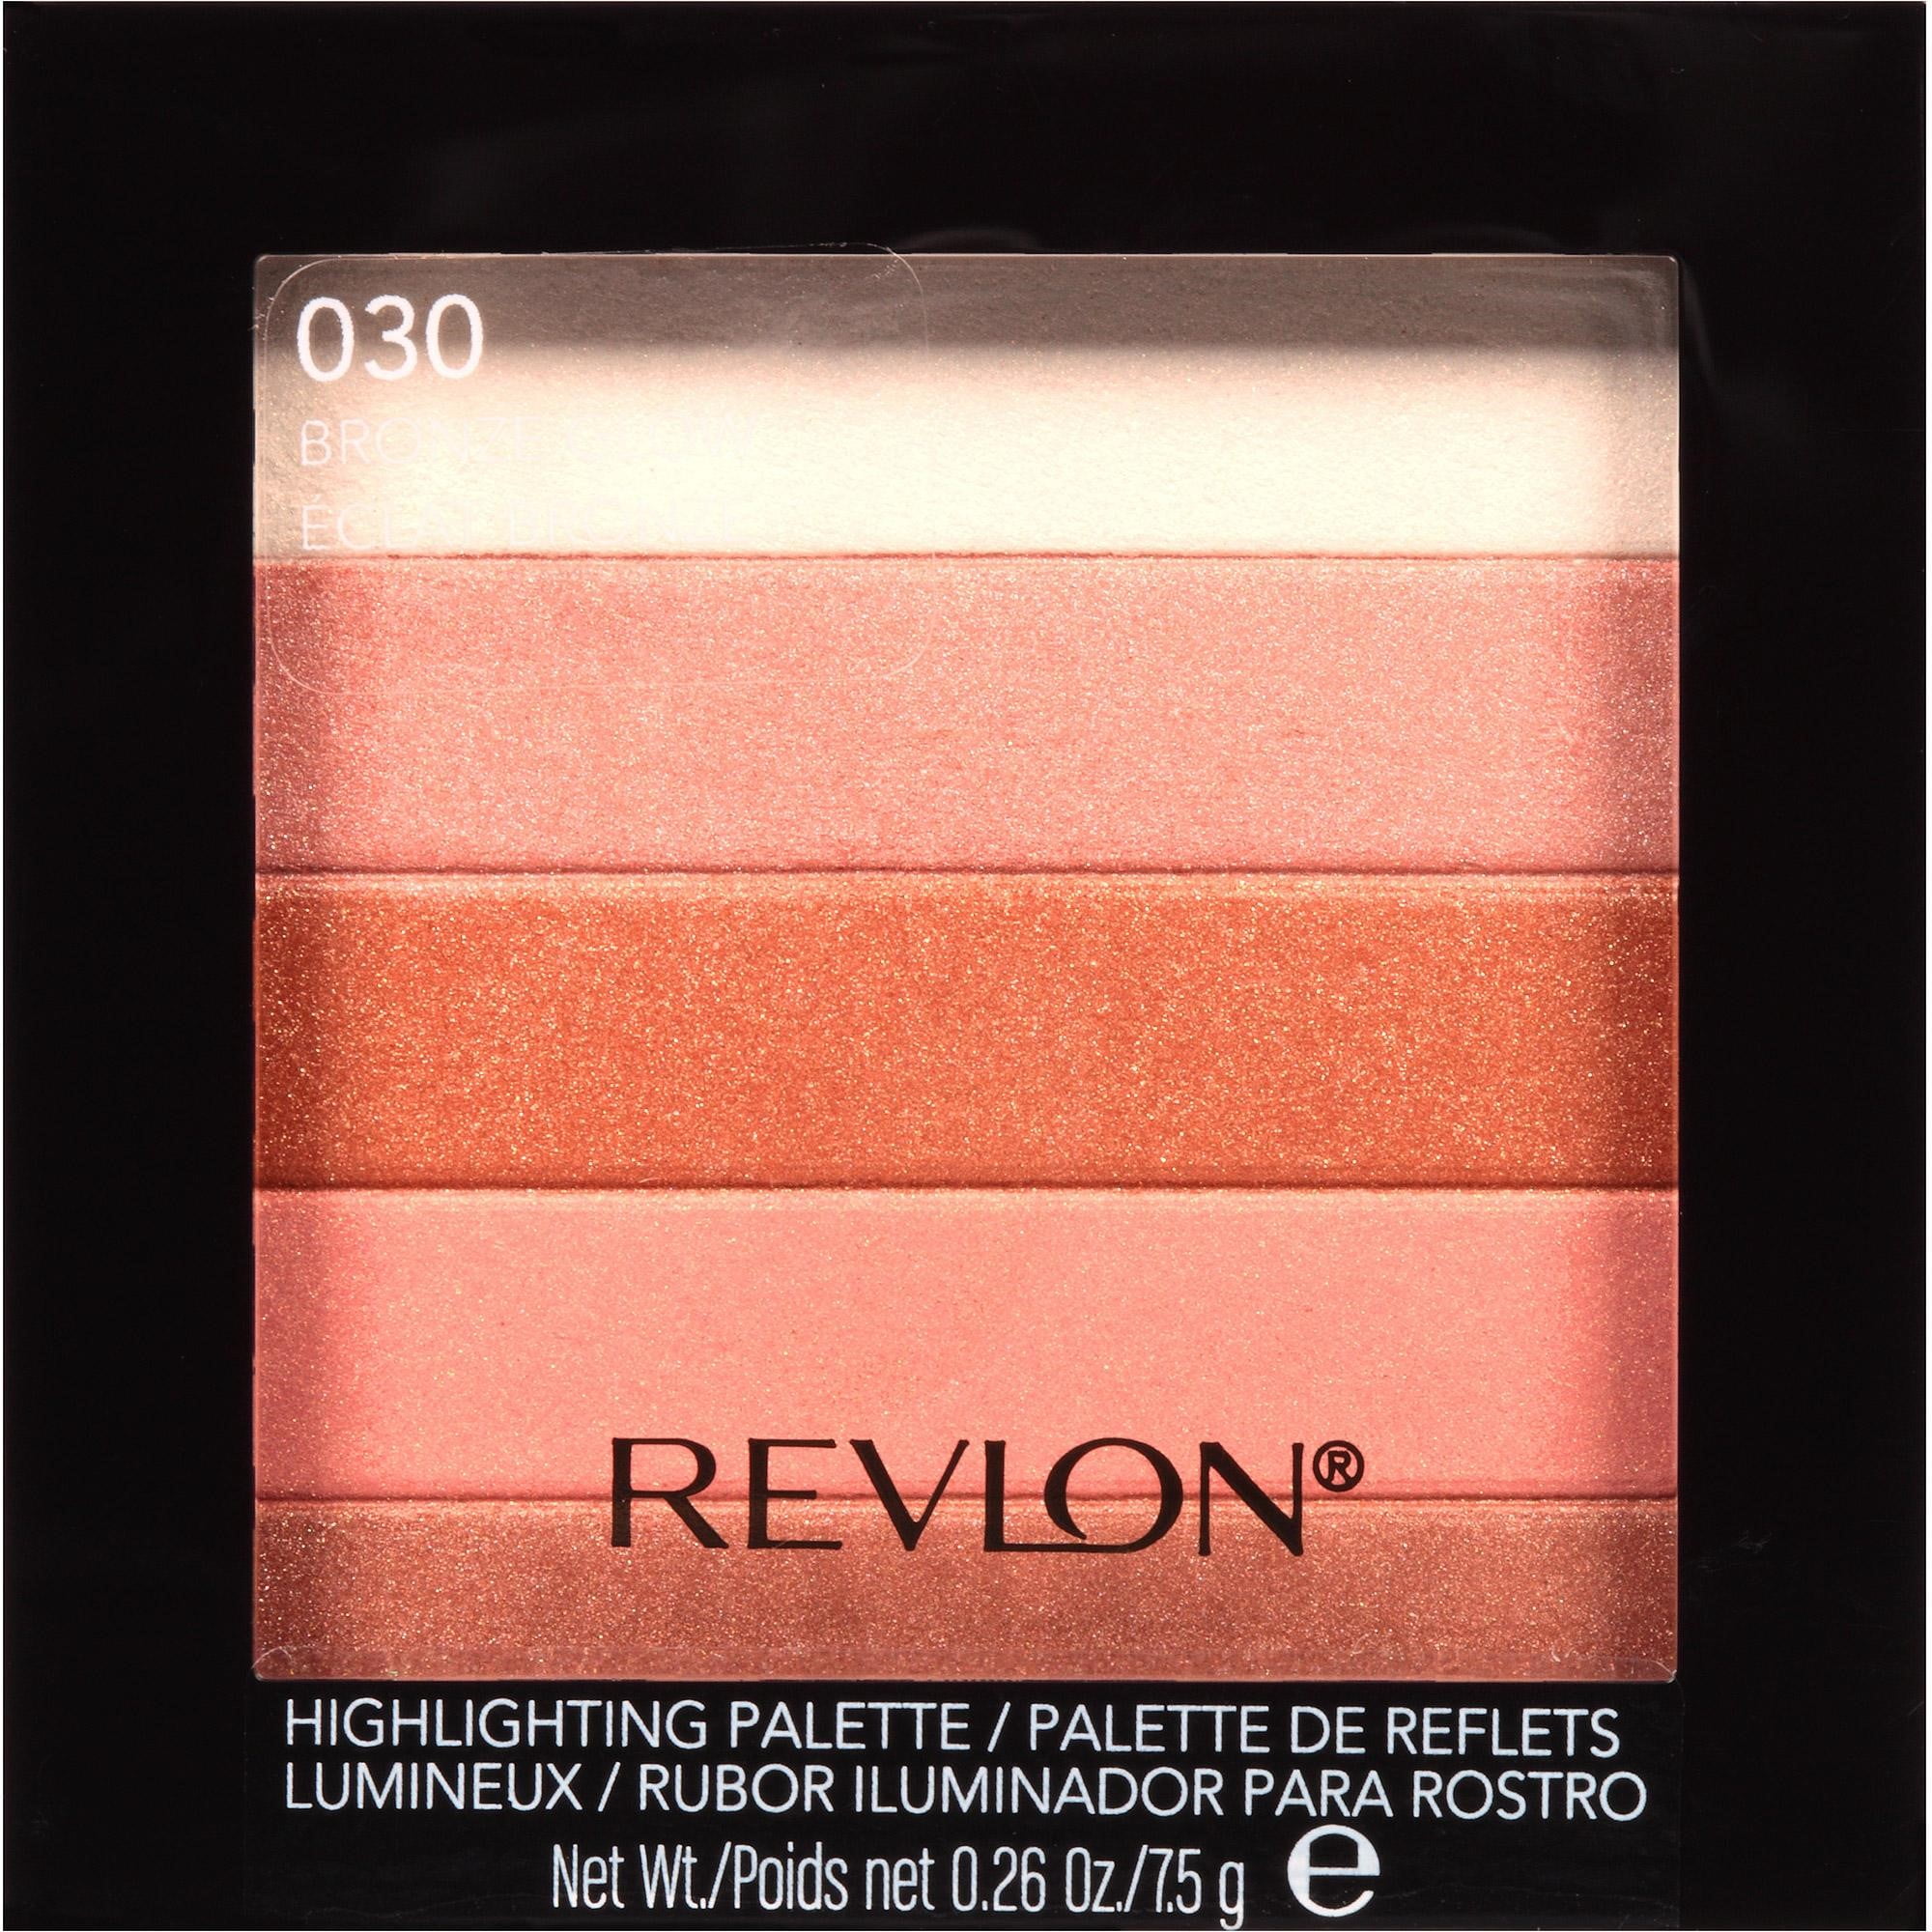 Revlon Highlighting Pallette, 030 Bronze - Walmart.com